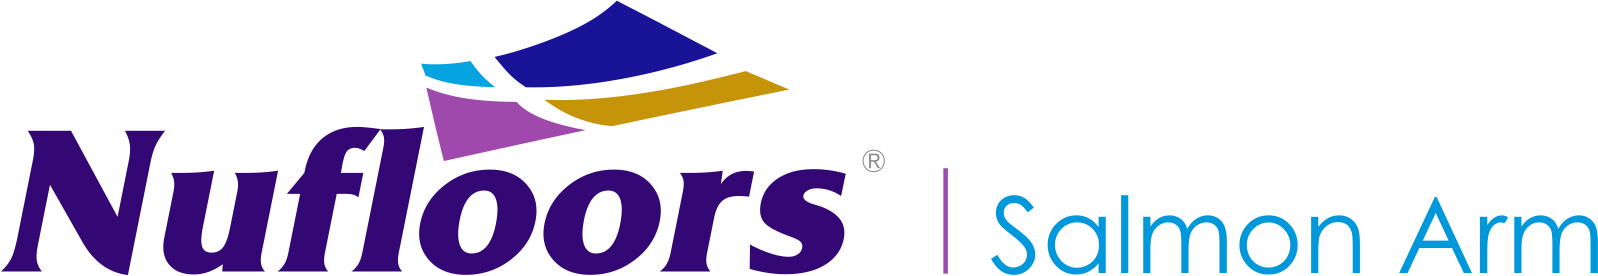 Nufloors Salmon Arm Logo